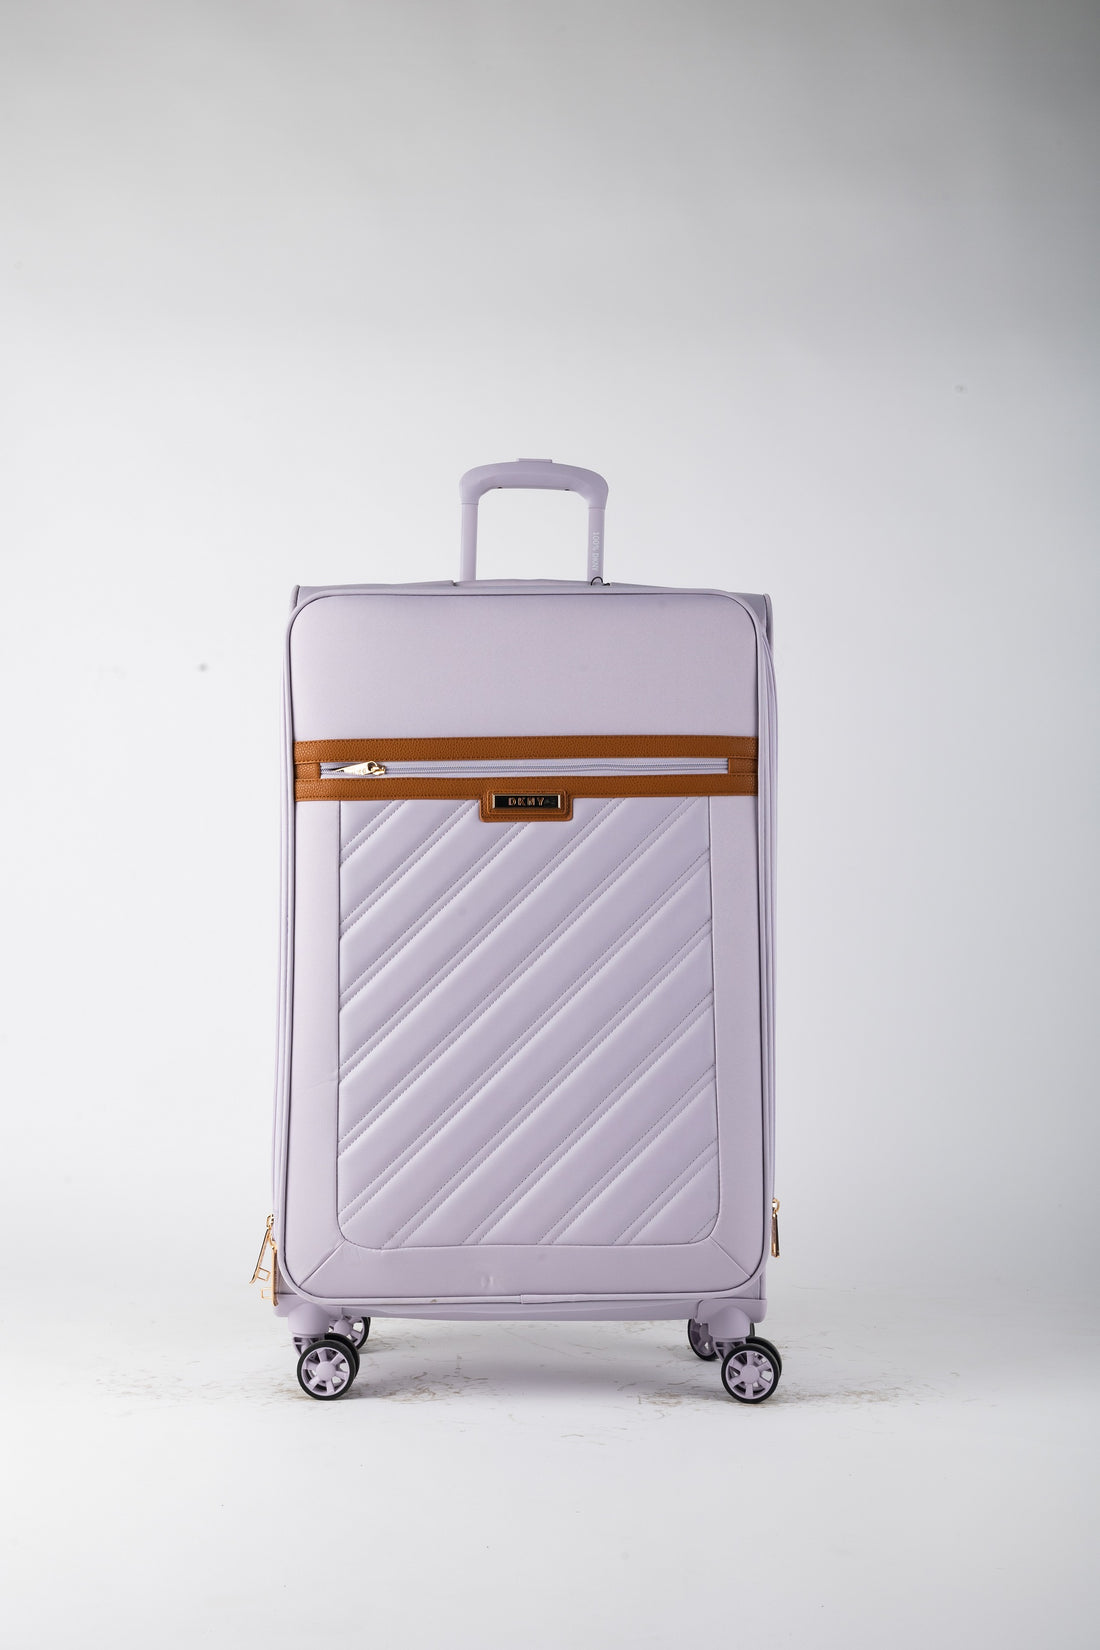 DKNY Purple Large Luggage